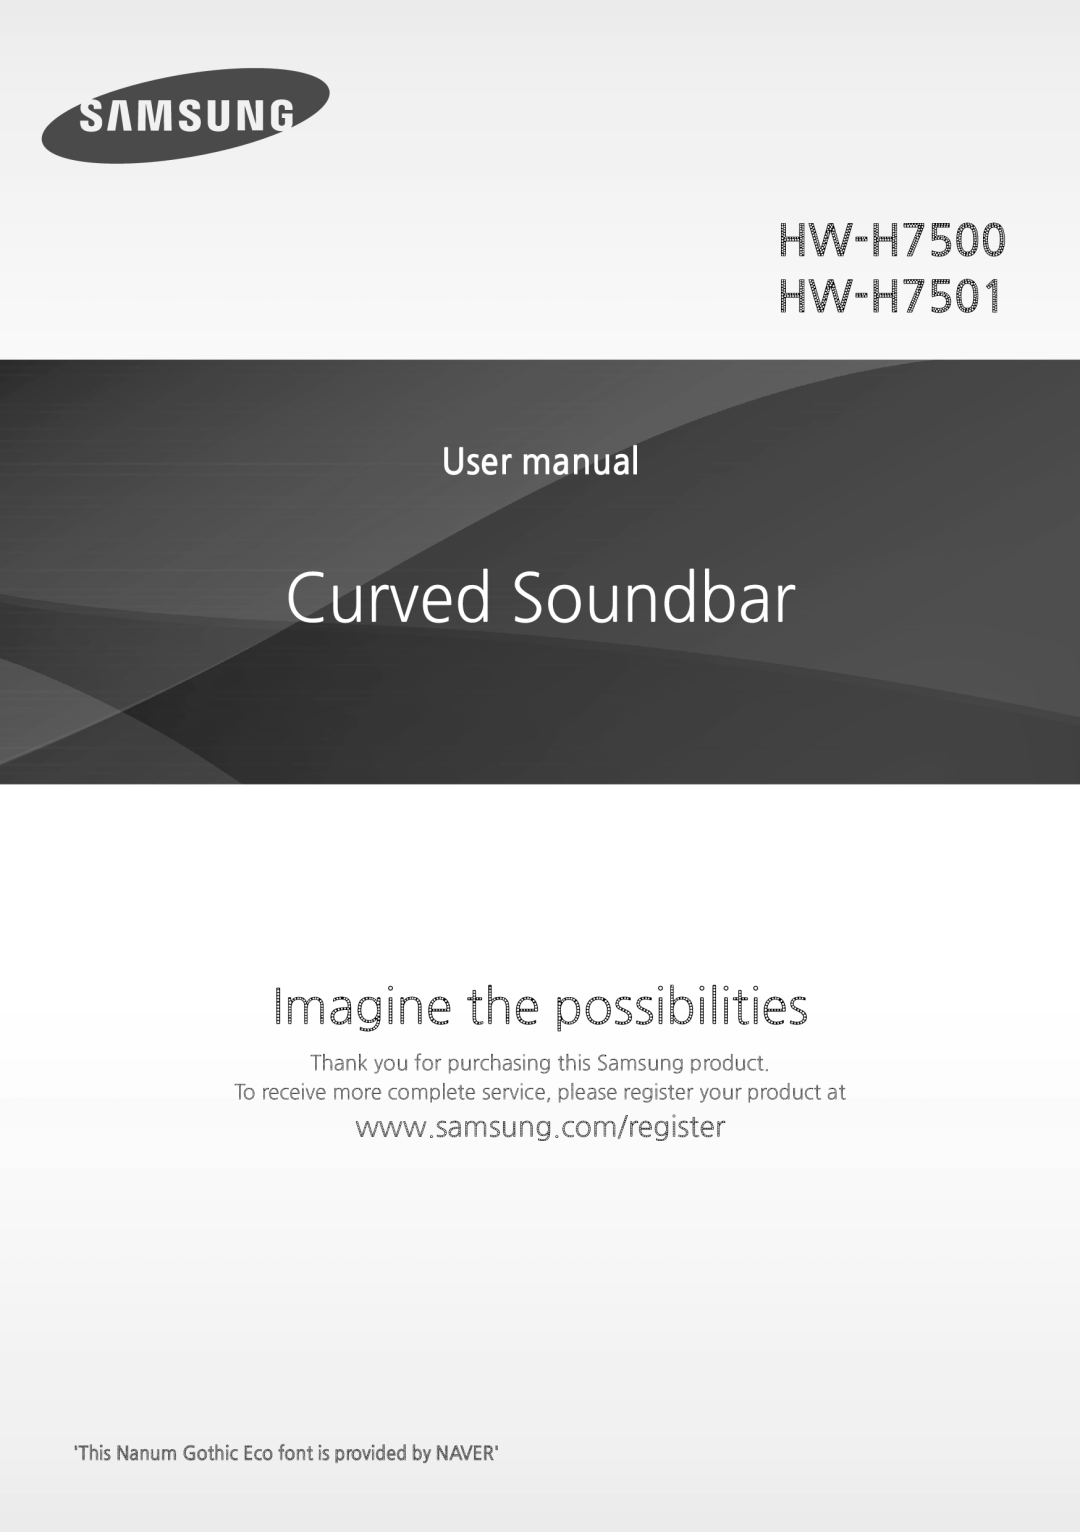 Samsung HWH7500 user manual Curved Soundbar, Imagine the possibilities, HW-H7500 HW-H7501, User manual 